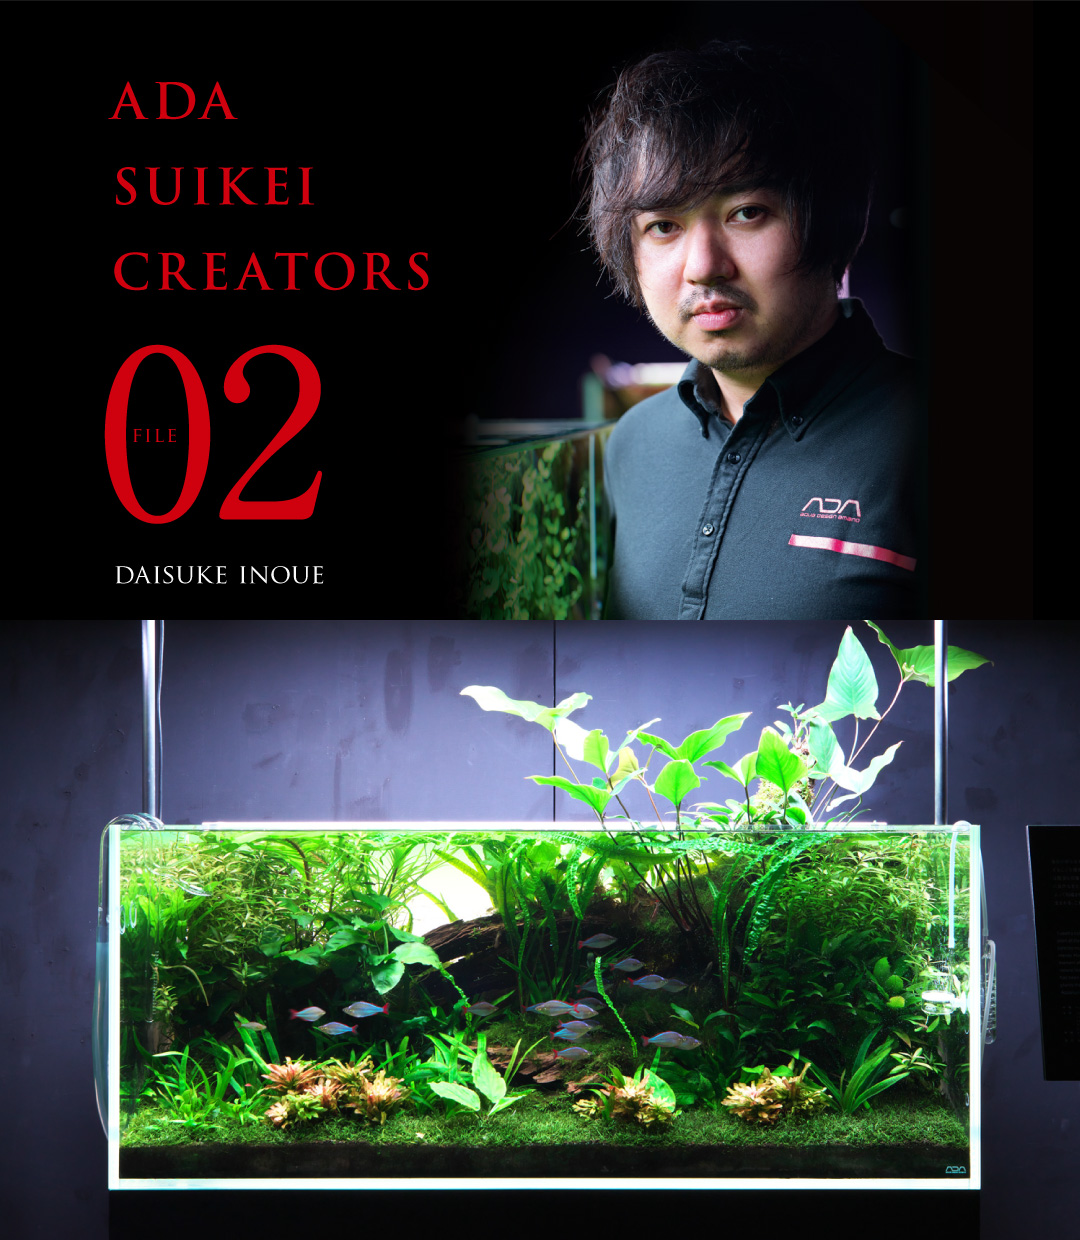 ADA SUIKEI CREATORS #02 Daisuke Inoue